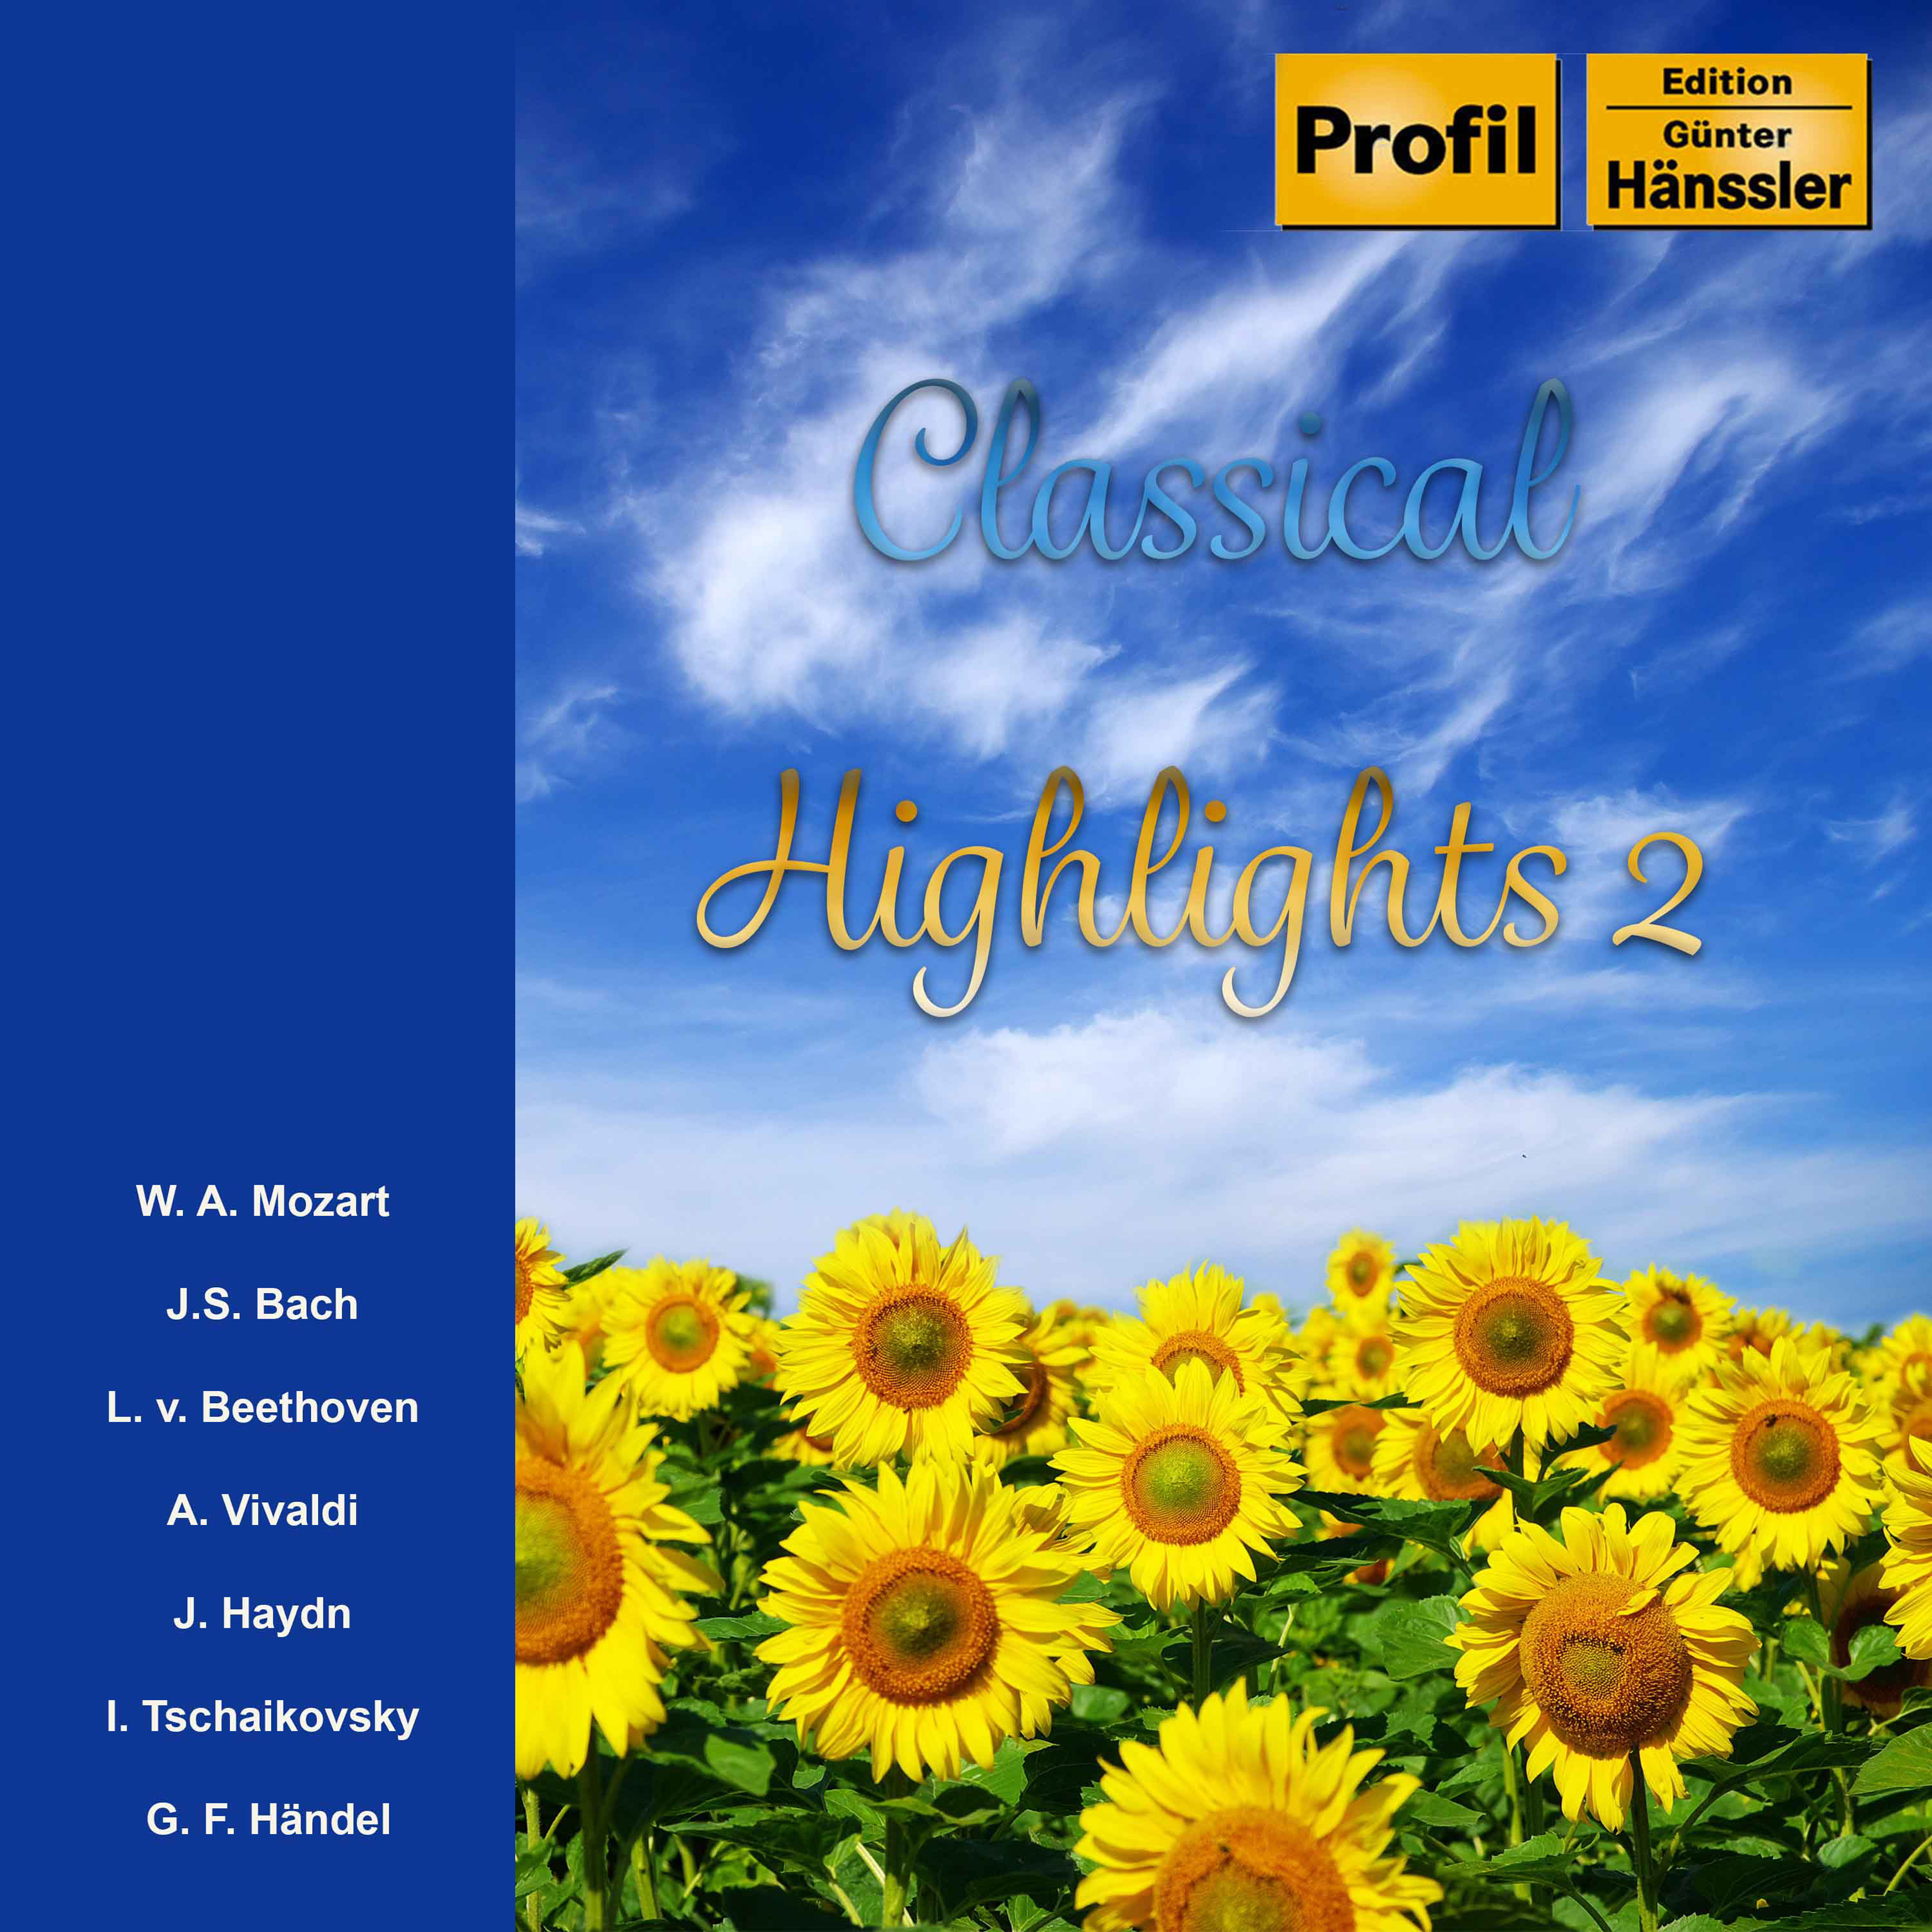 The Four Seasons, Violin Concerto in F Major, Op. 8 No. 3, RV 293 "Autumn": I. Allegro